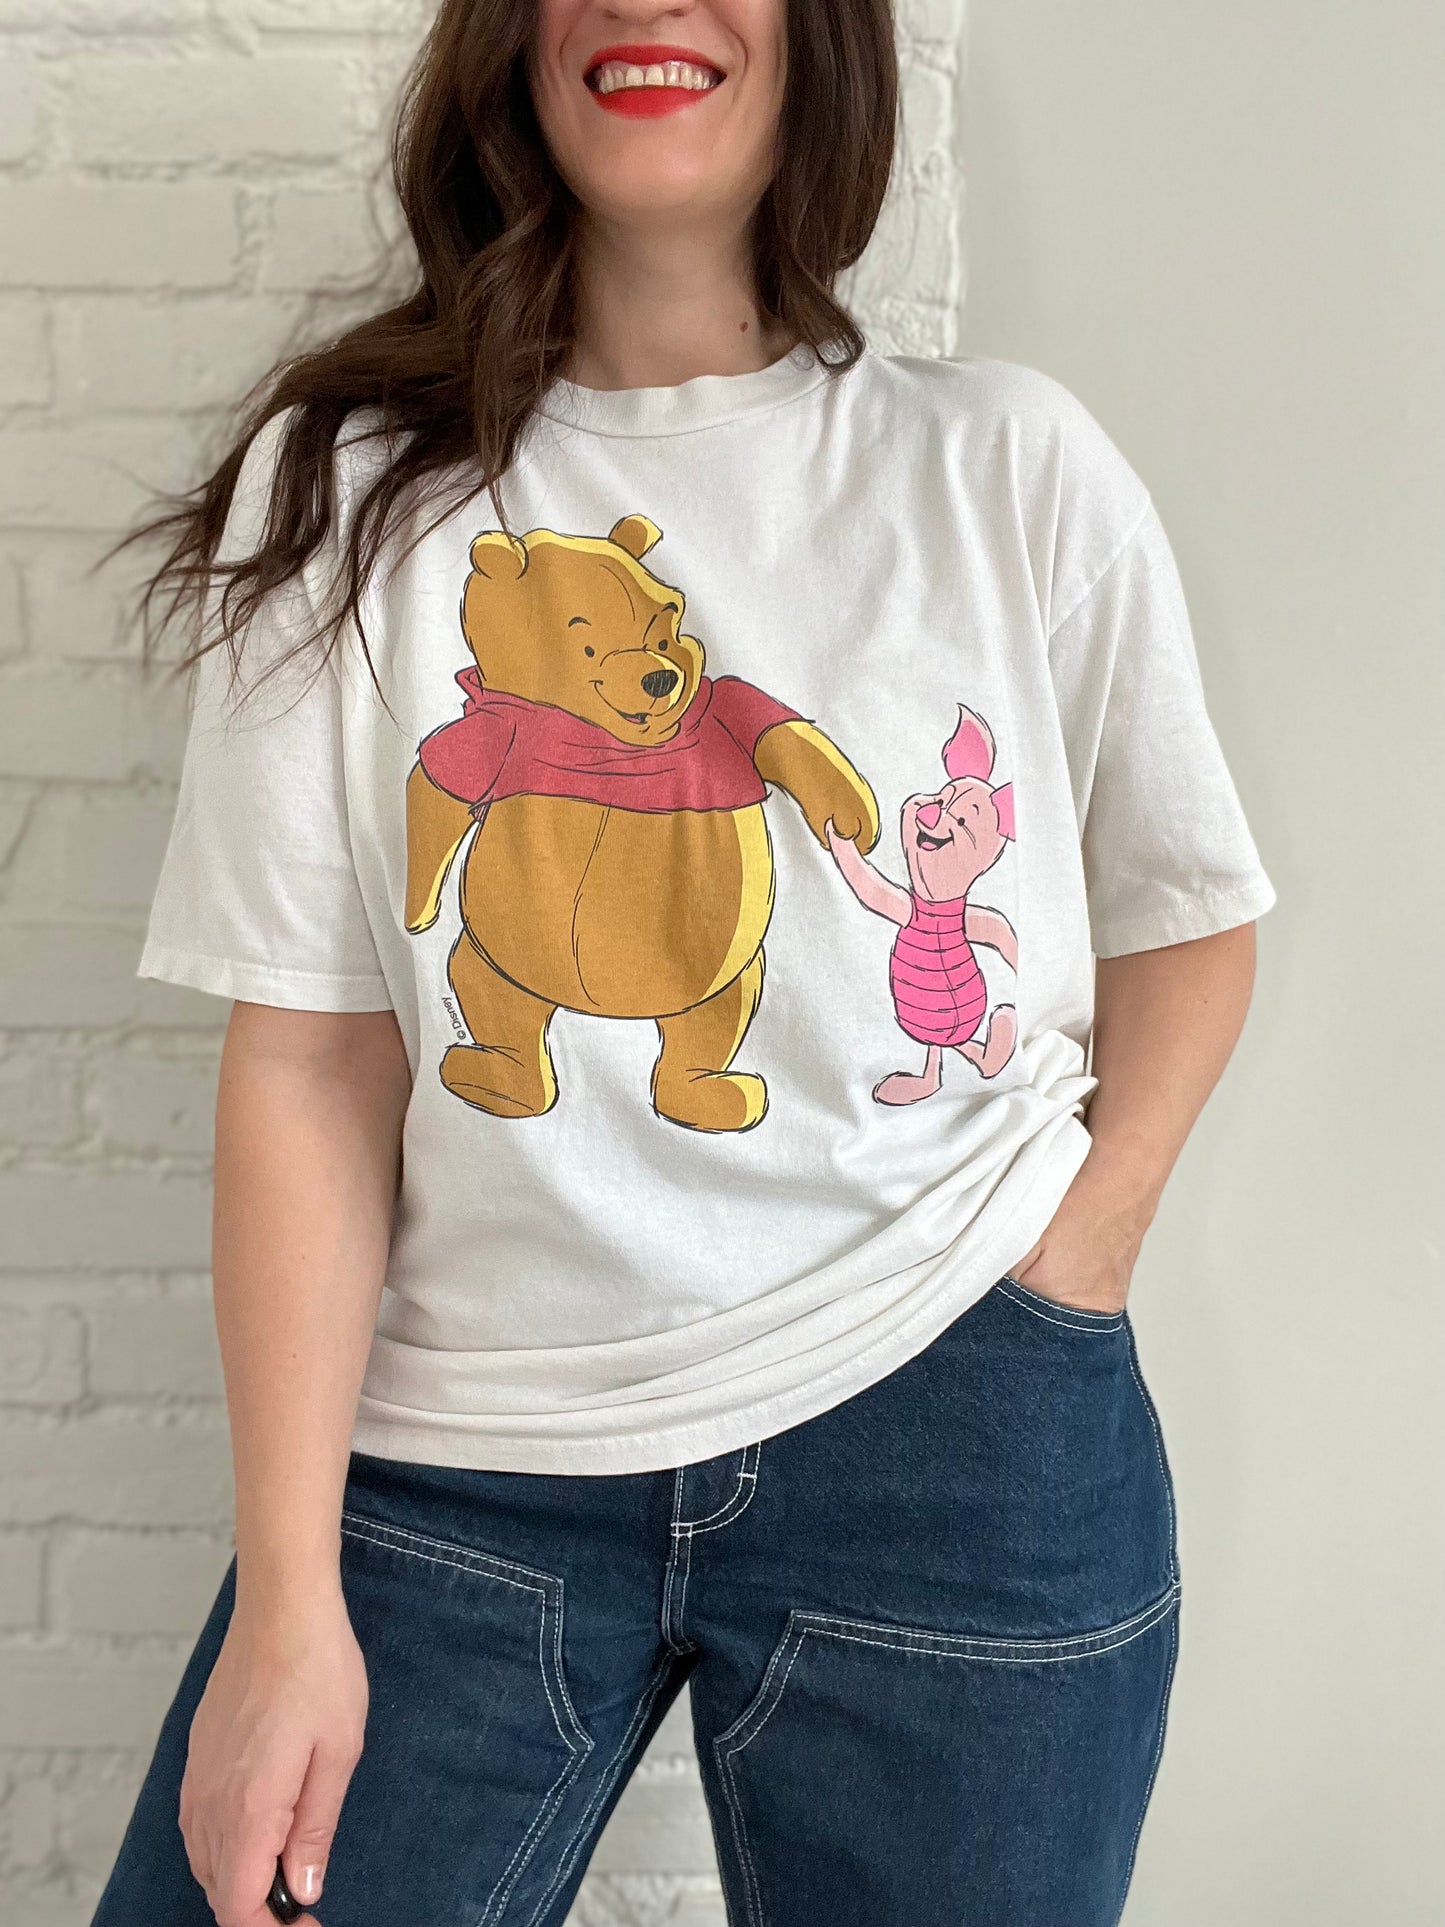 Vintage Winnie the Pooh & Piglet T-shirt - Mens XL